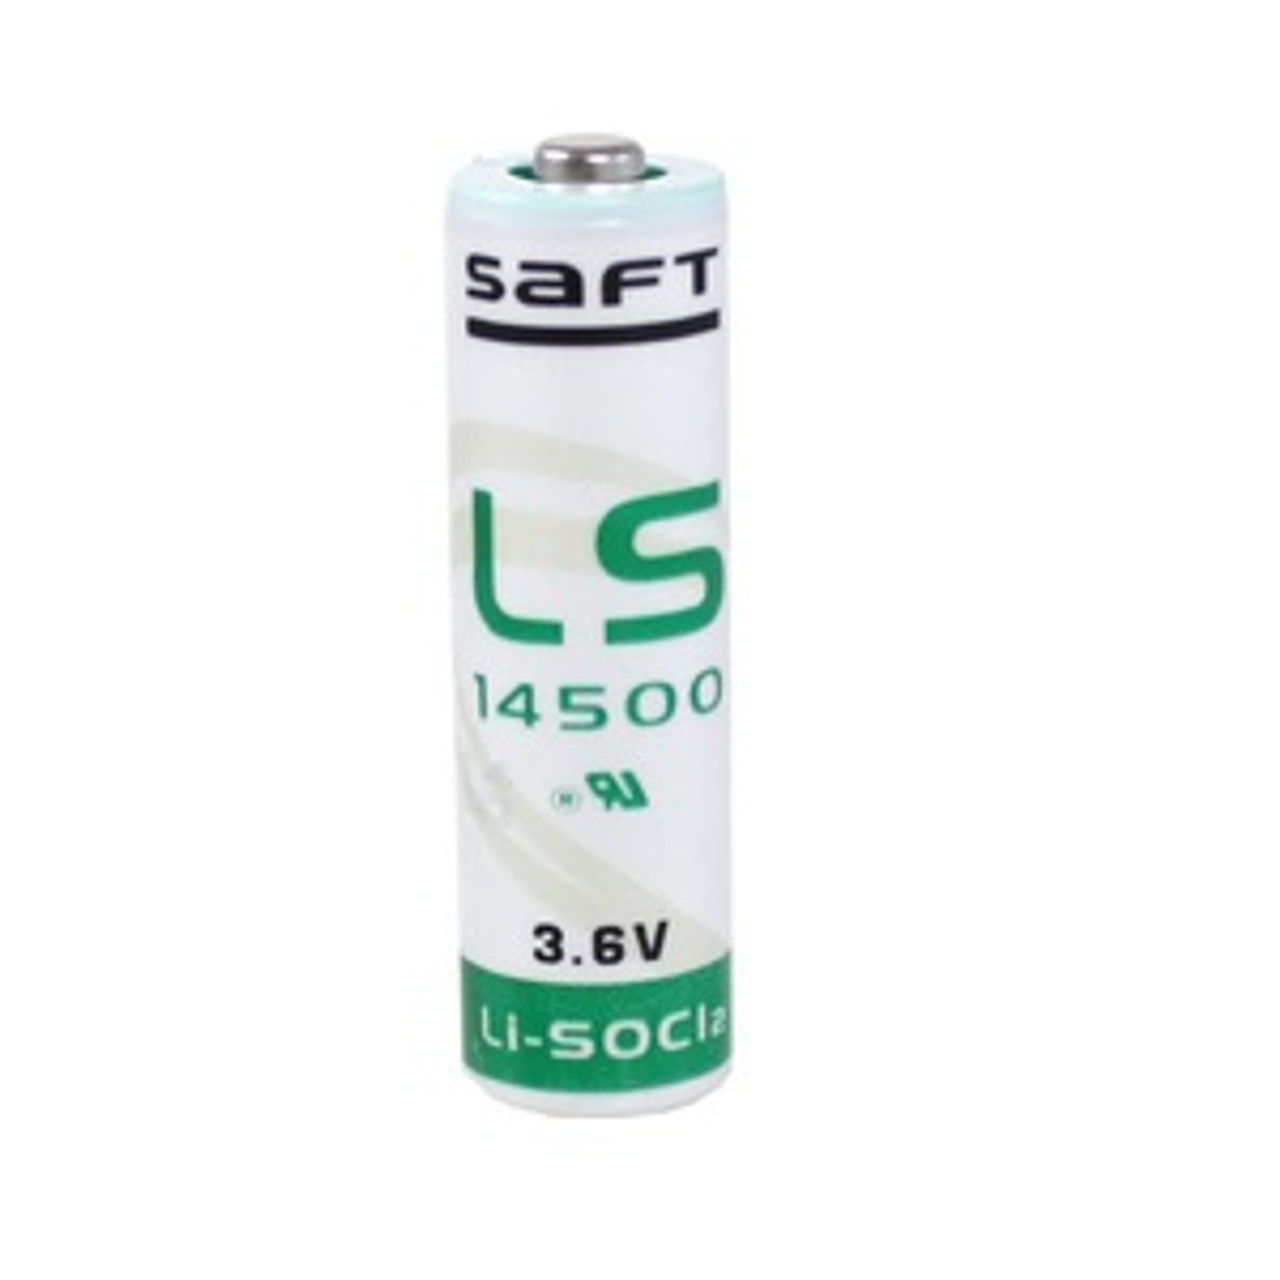 Pile Lithium SAFT LSH 20